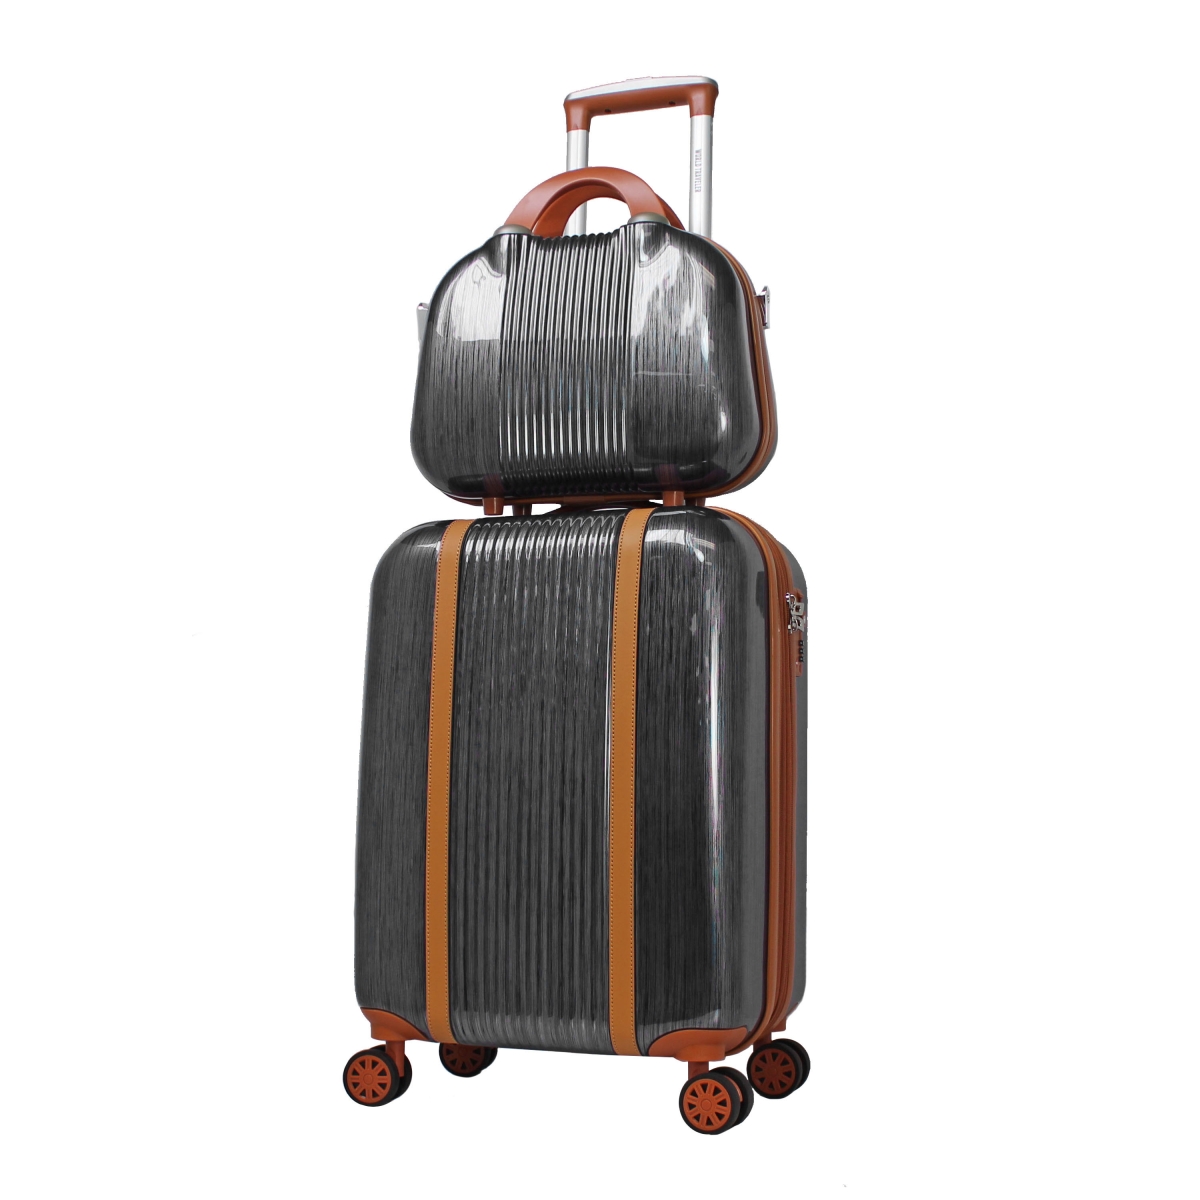 Wt8277-2-black 2 Piece Classique Lightweight Spinner Luggage Set - Black